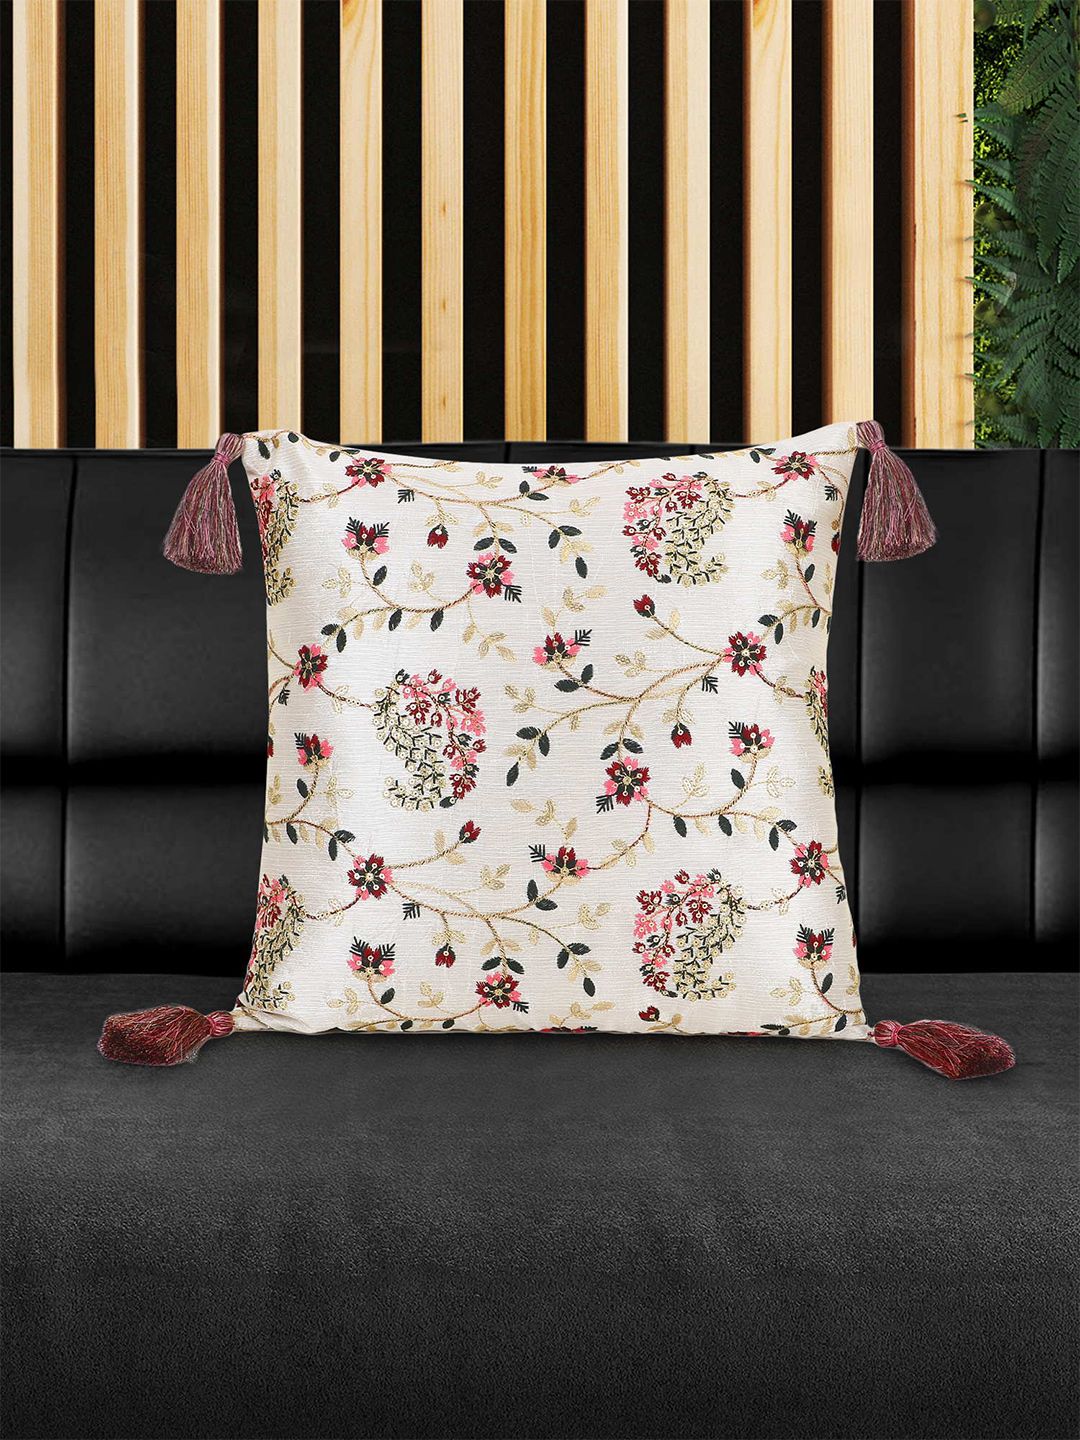 Mezposh Embroidered Square Cushion Covers Price in India